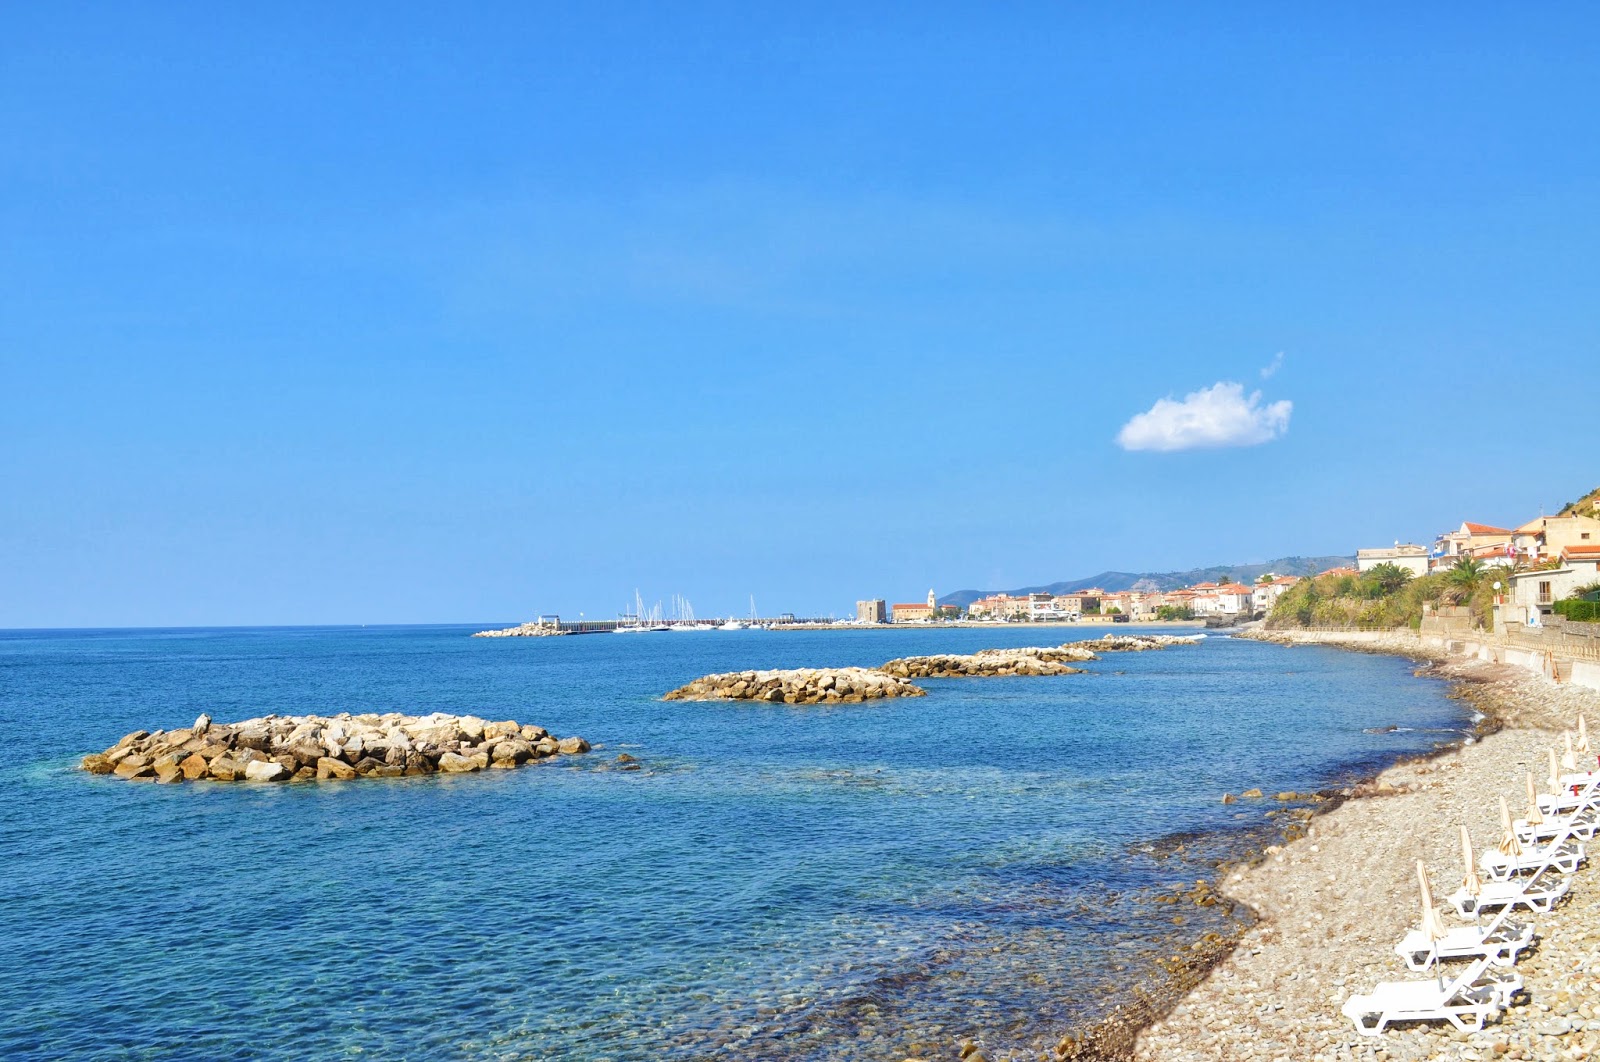 Foto von Acciaroli beach mit brauner kies Oberfläche